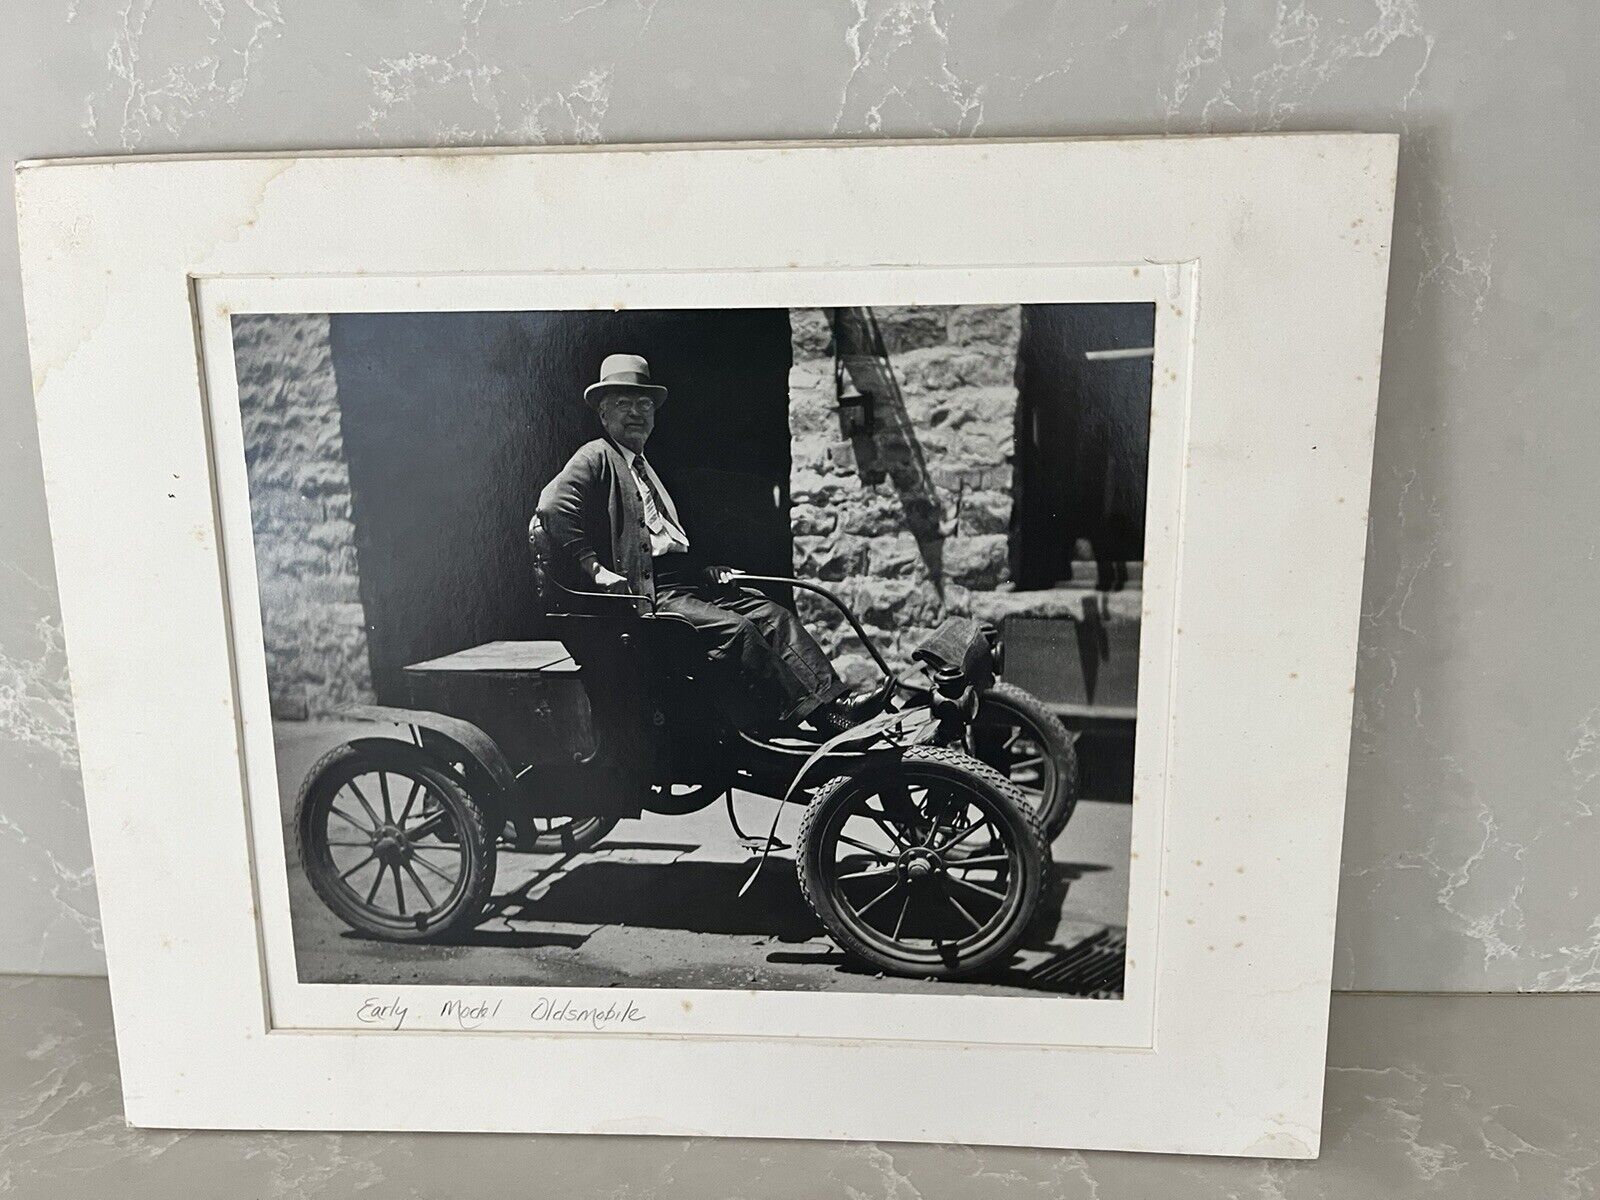 Vintage Early Model Oldsmobile 9.5” x 7.5” Black/White Photograph